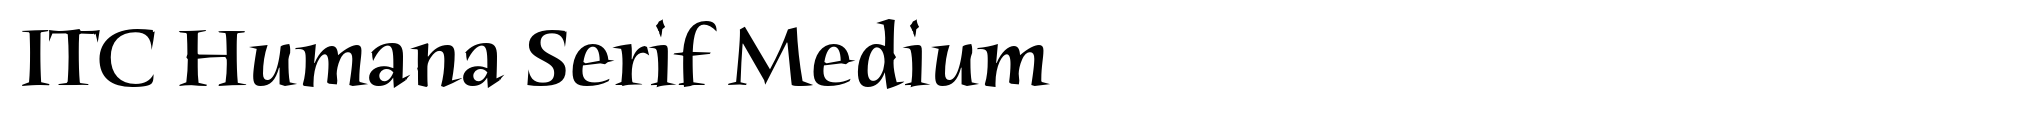 ITC Humana Serif Medium image